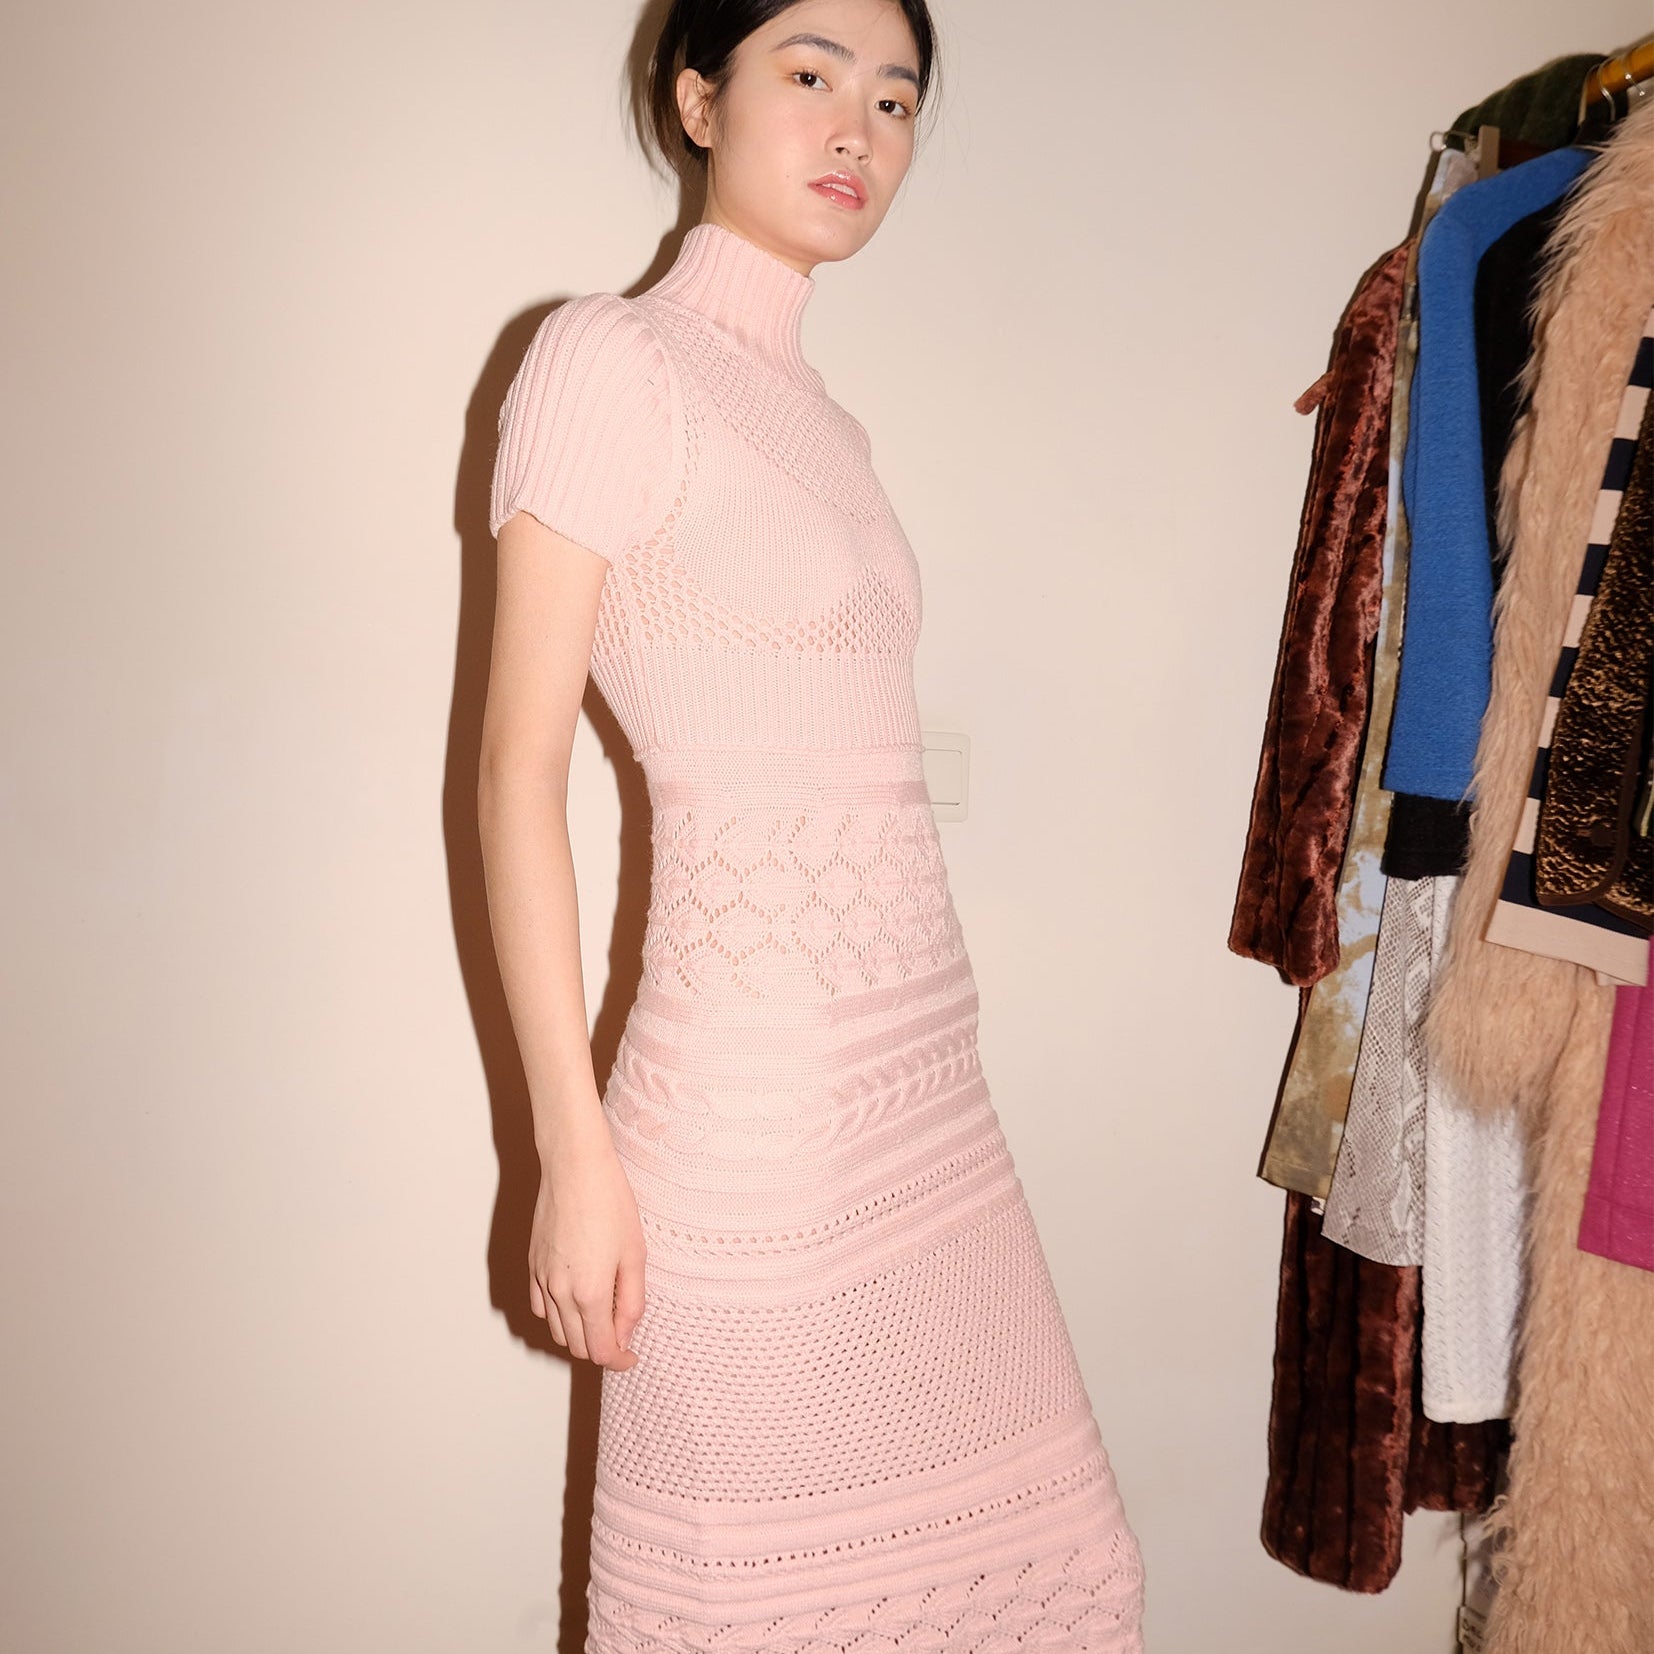 Splice crocheted dress in cherry blossom